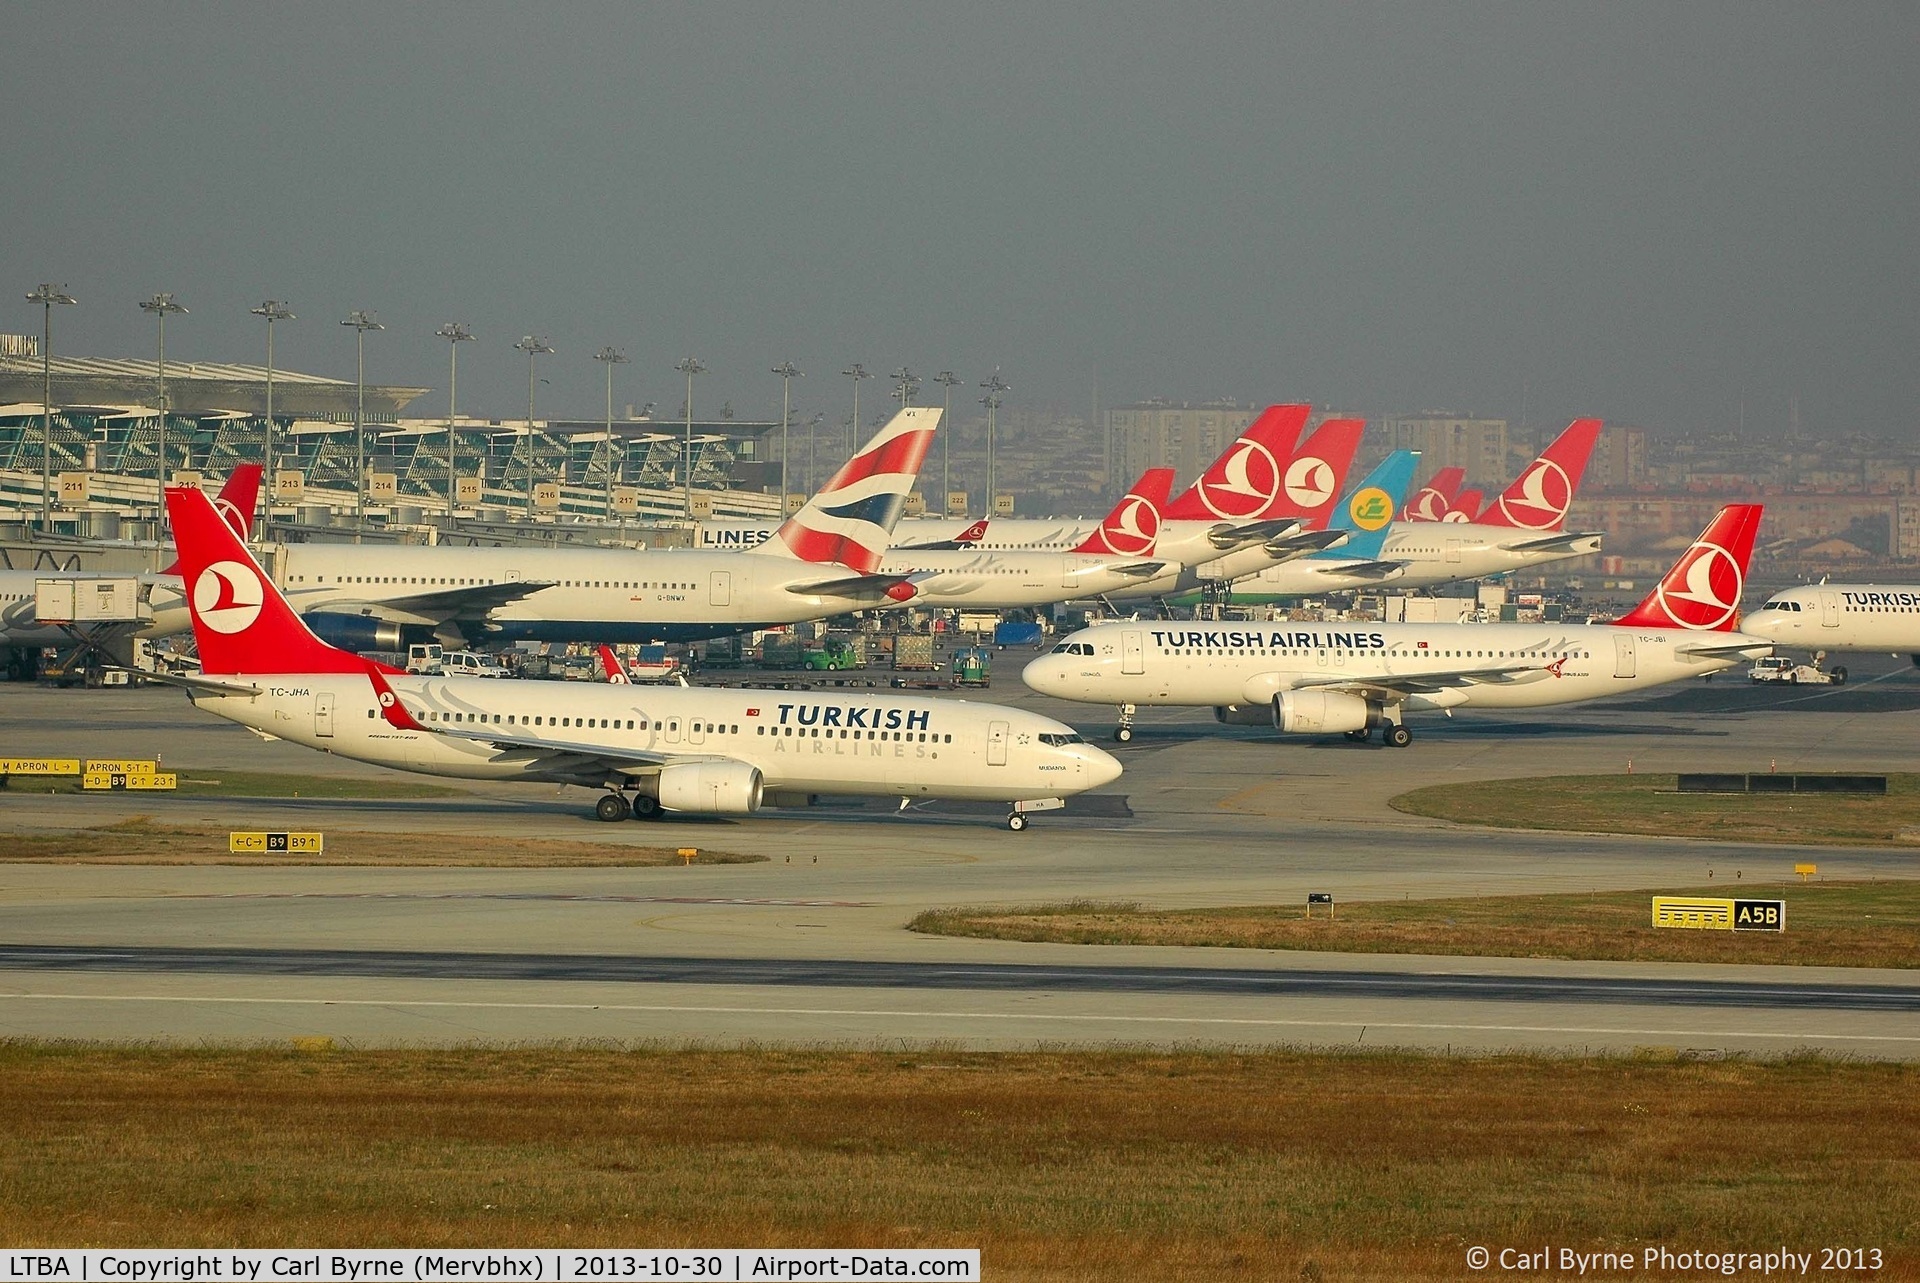 Istanbul Atatürk International Airport, Istanbul Turkey (LTBA) - Taken from the Fly Inn Shopping Mall.